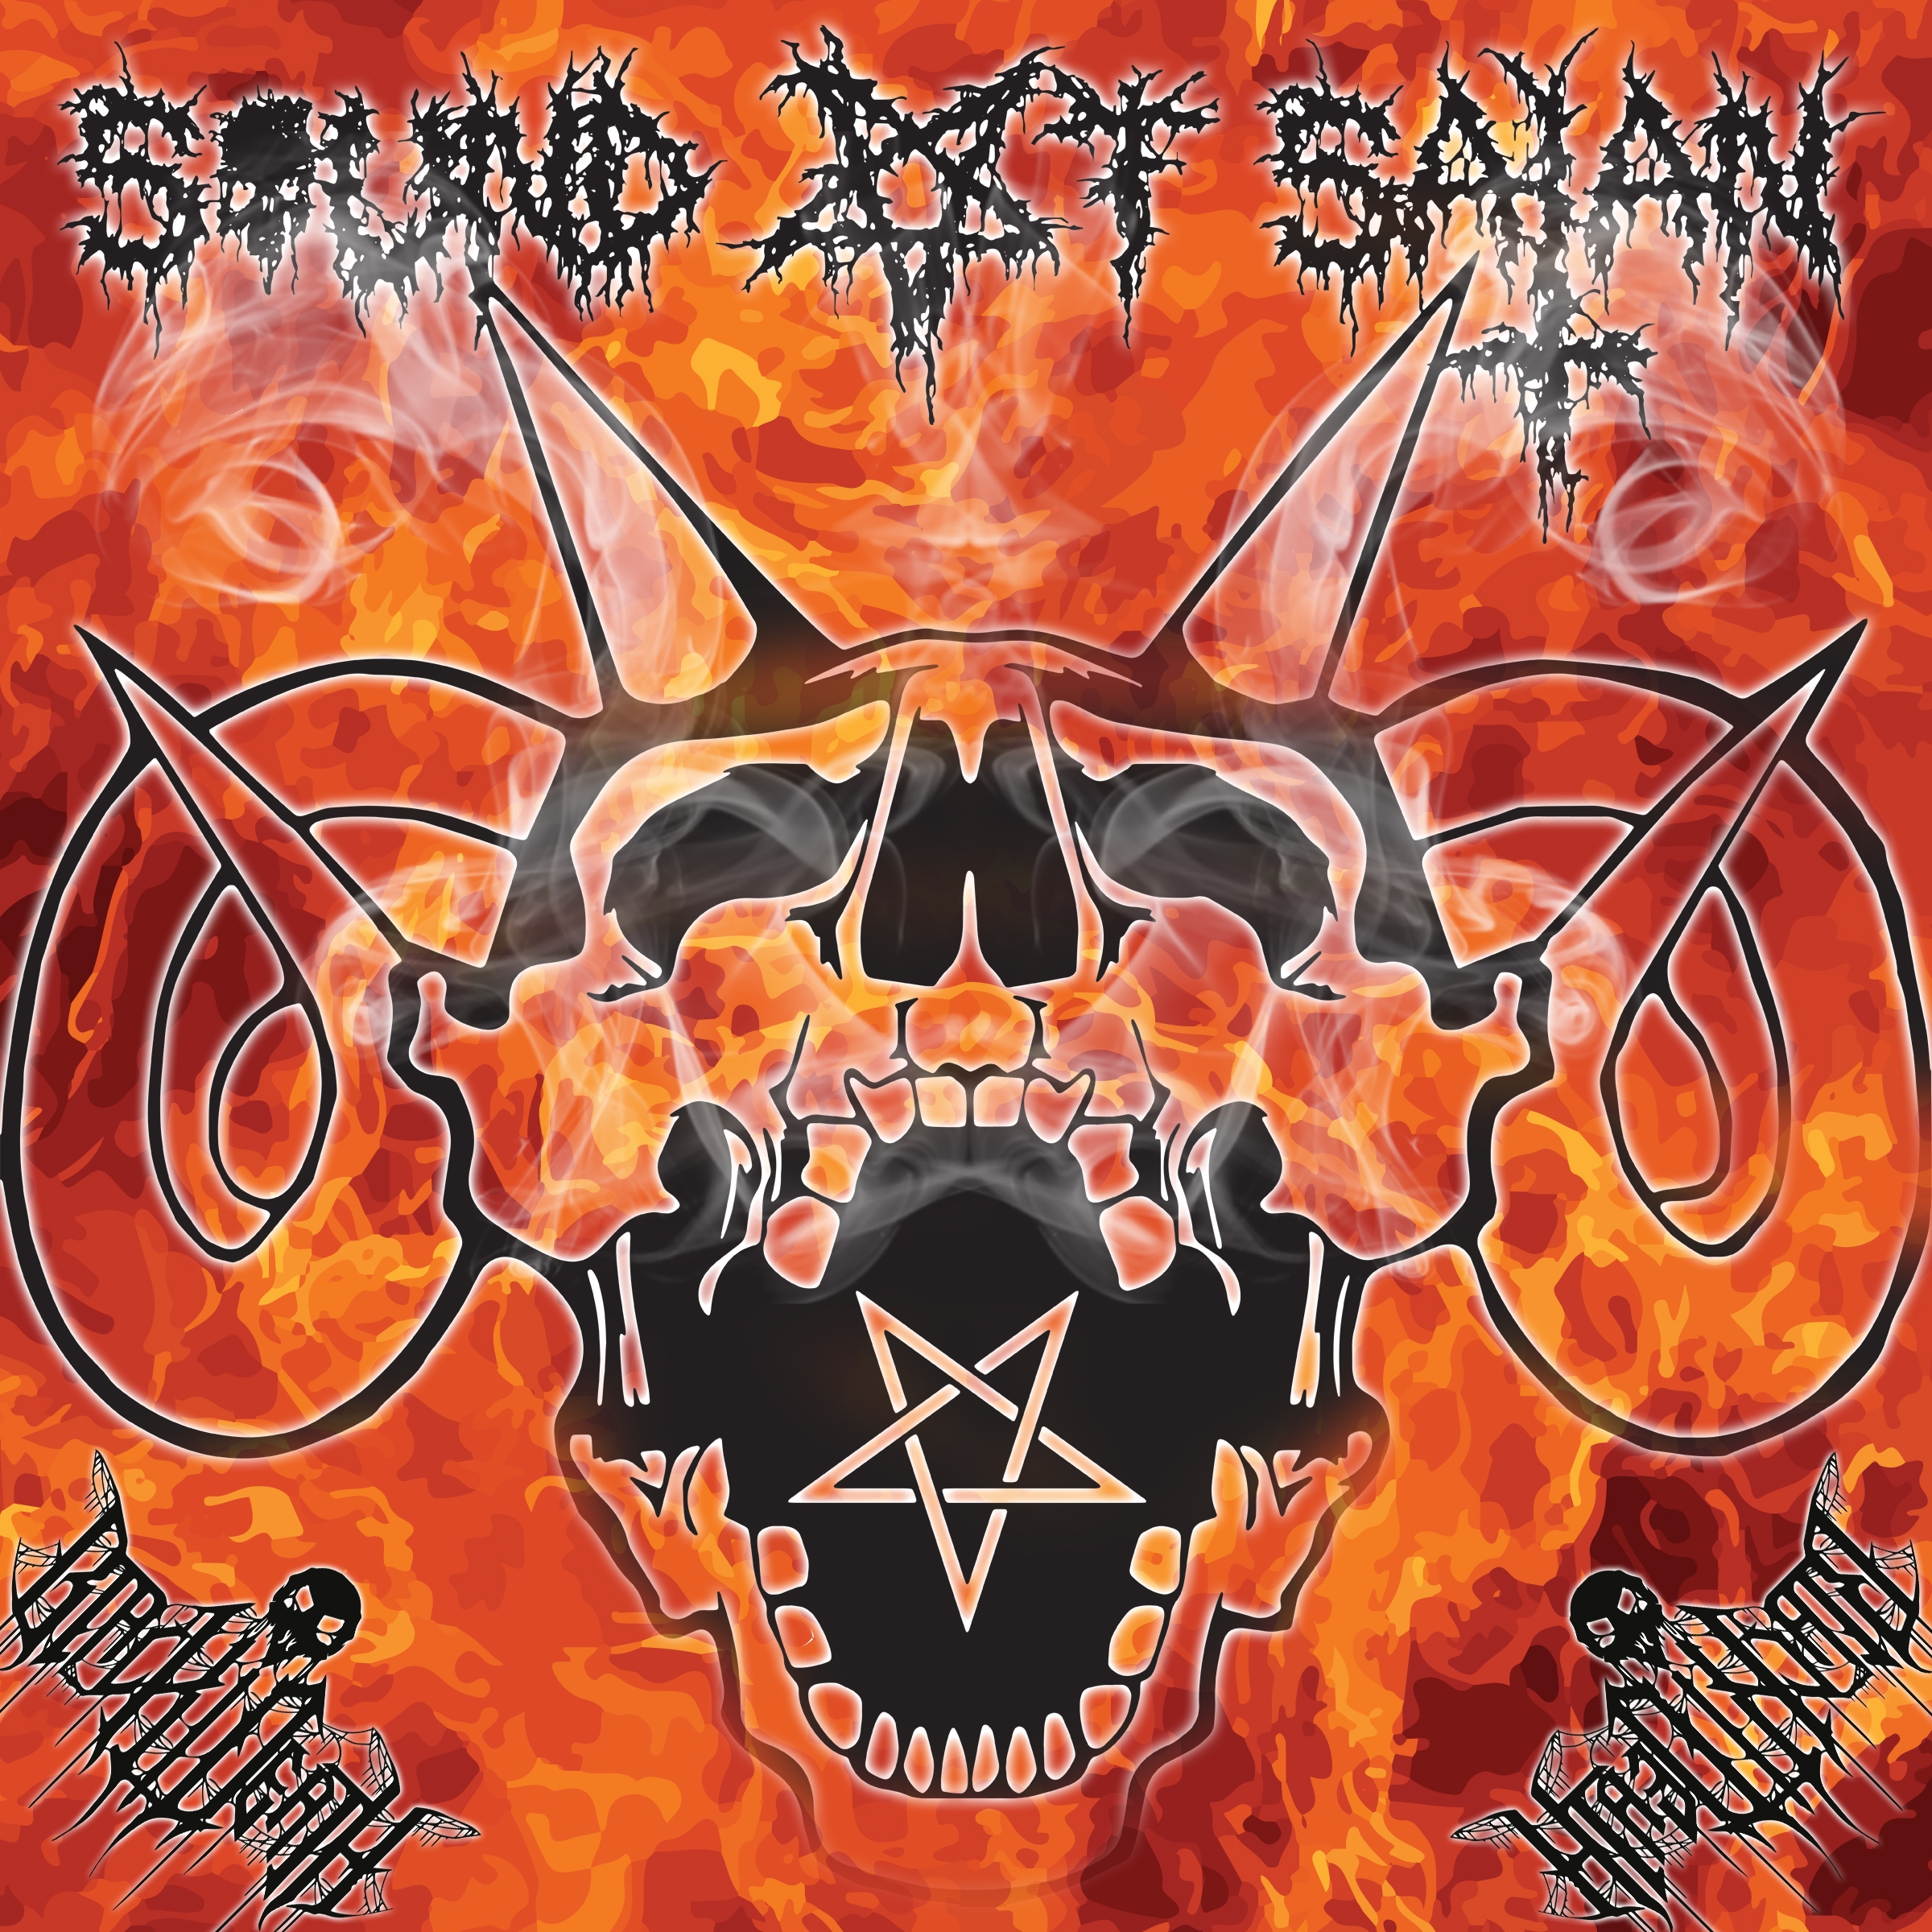 Black Death - Sound Of Satan - MP3 and WAV downloads at Hardtunes